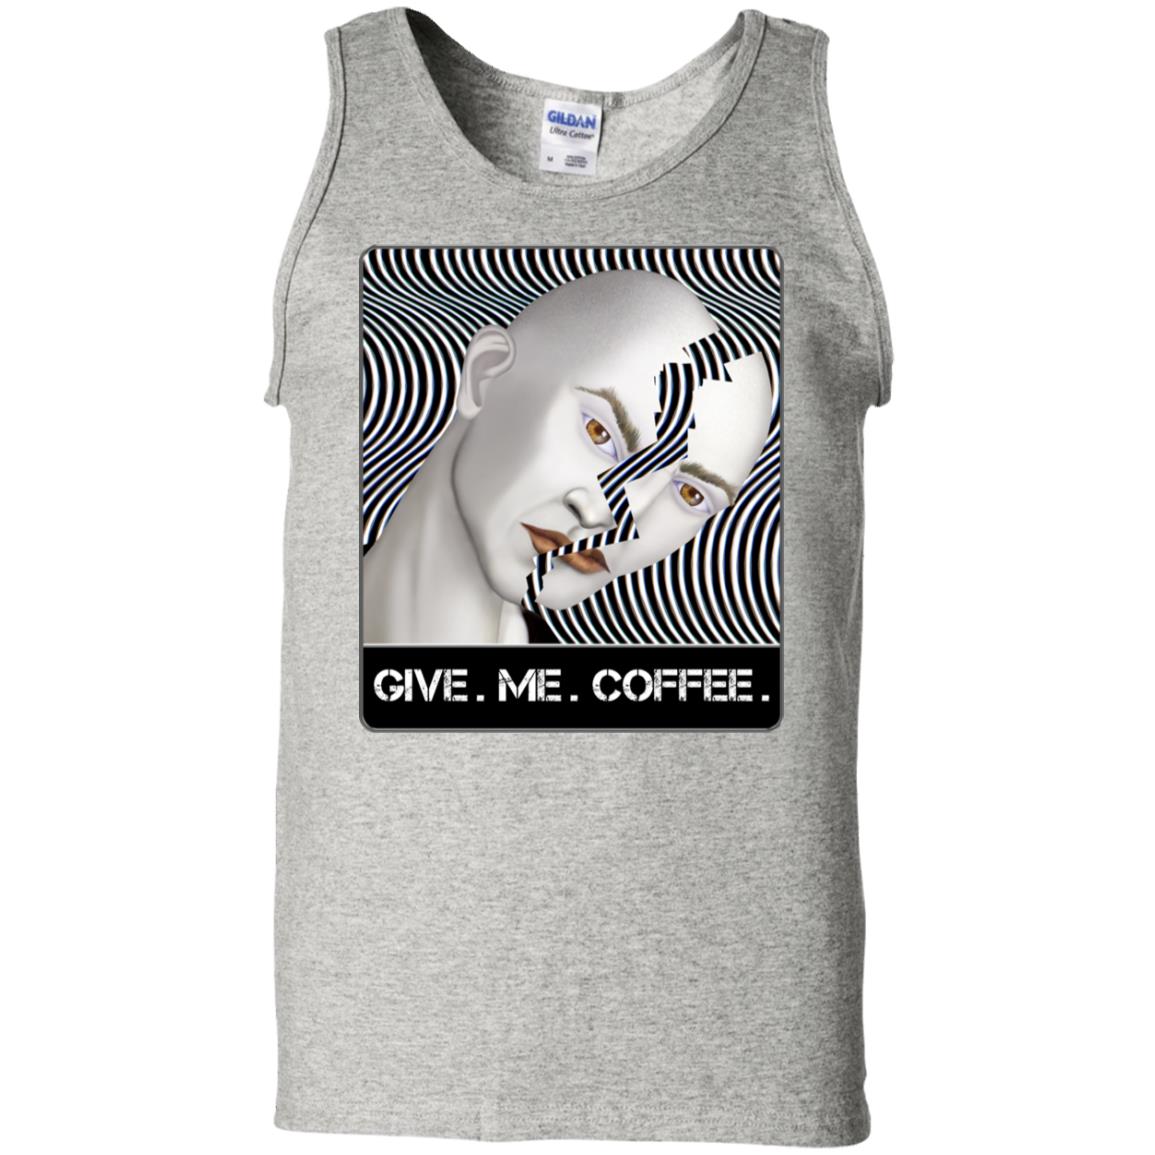 GIVE. ME. COFFEE. - Men's Tank Top